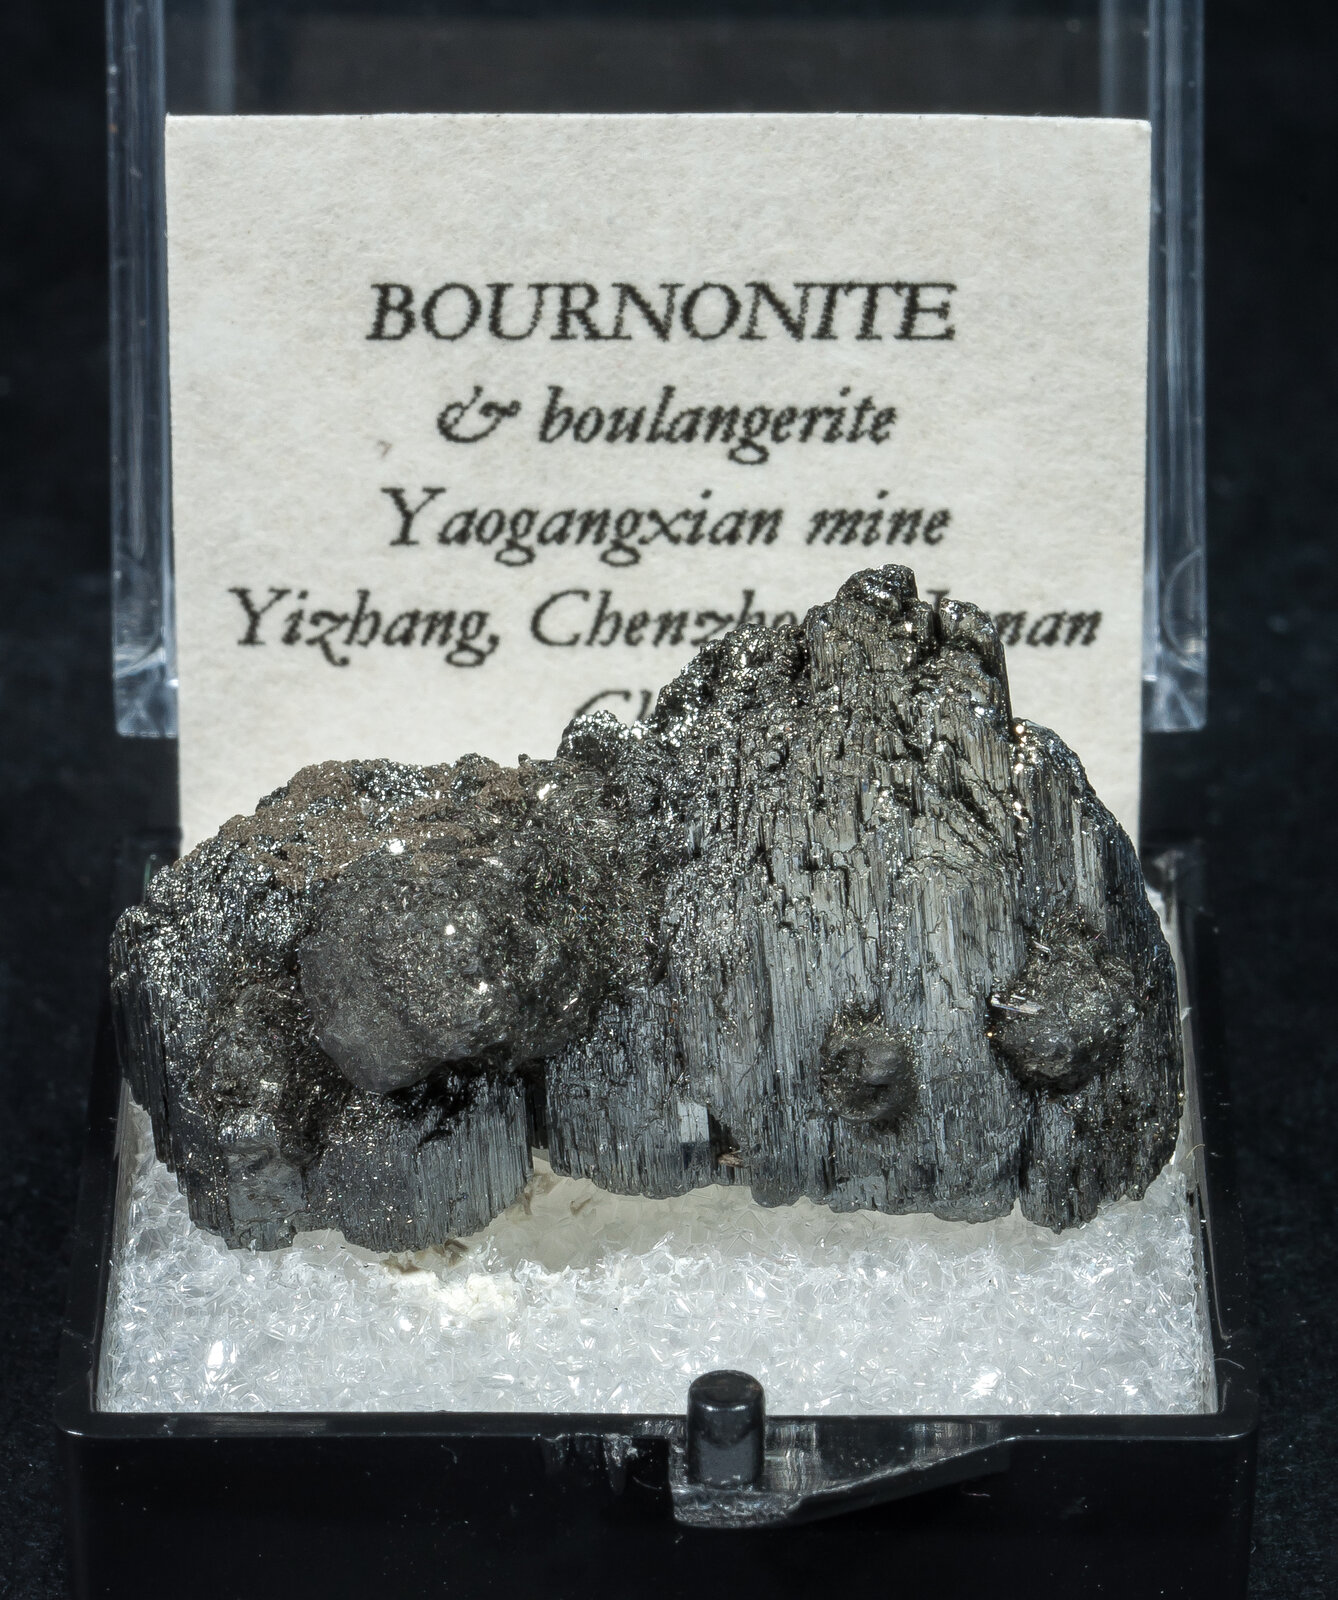 specimens/s_imagesAN4/Bournonite-TTV14AN4f1.jpg